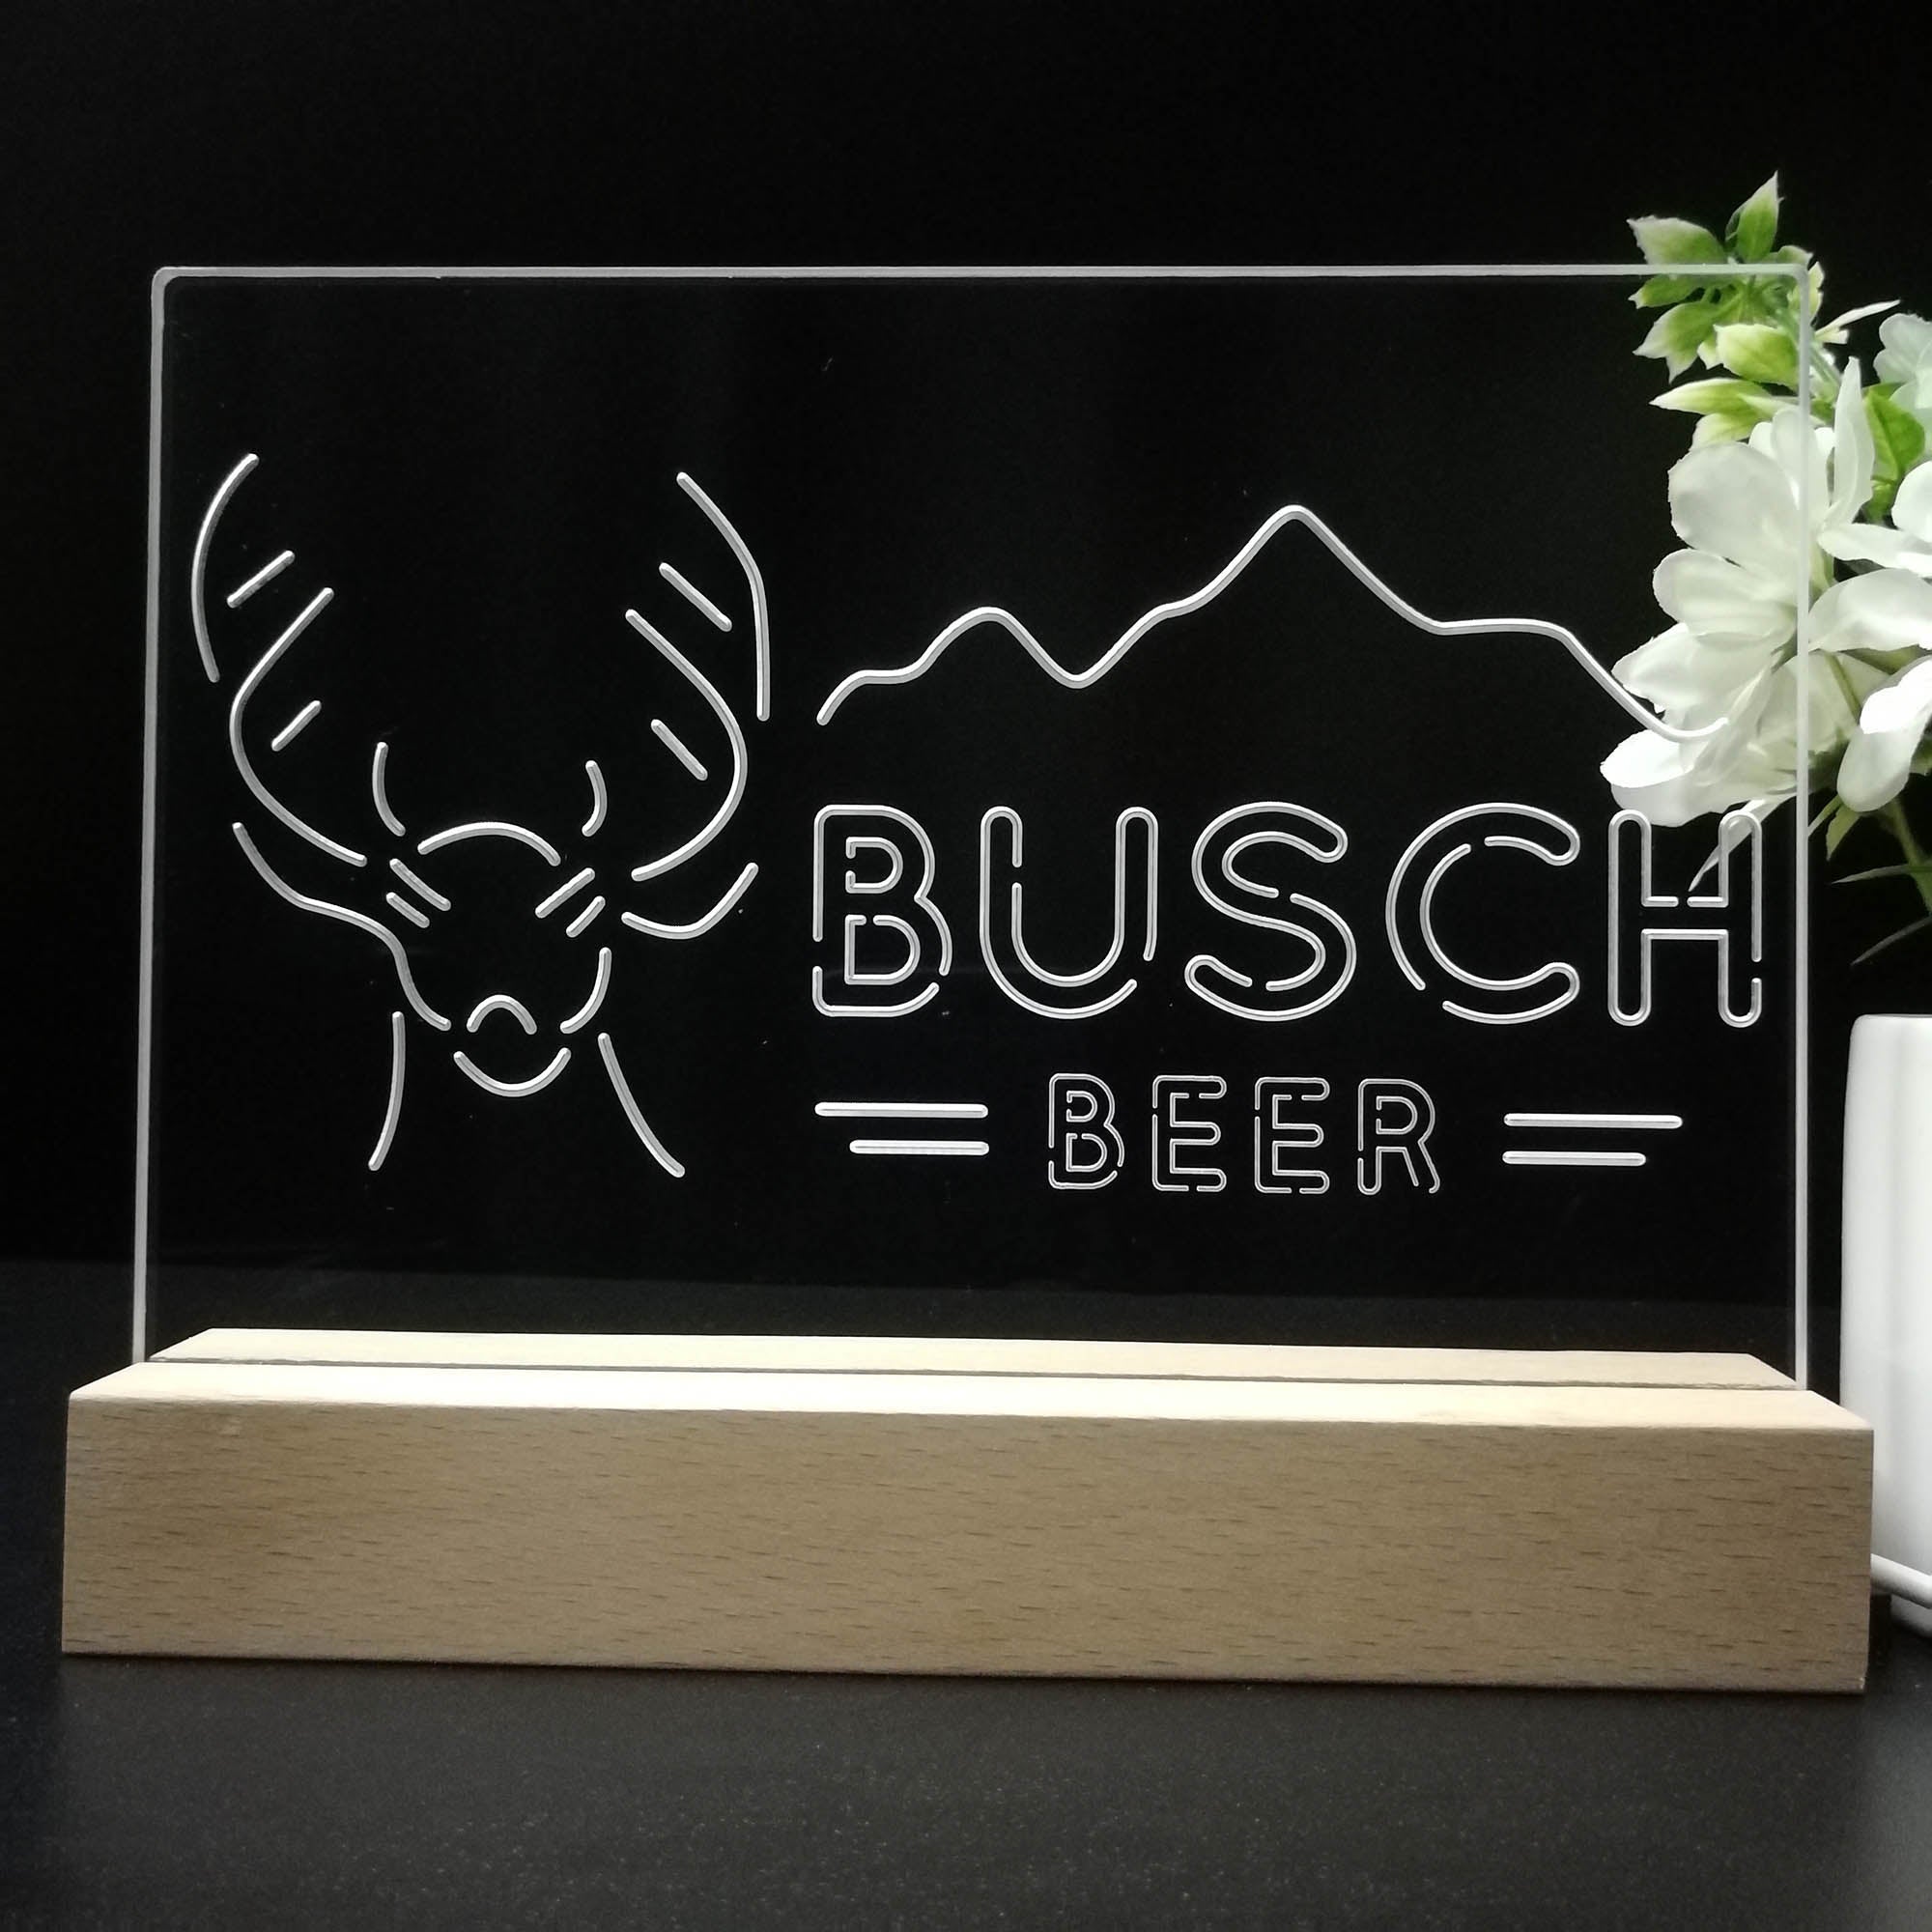 Buschs Beer Deer Mountain Neon Sign Pub Bar Lamp